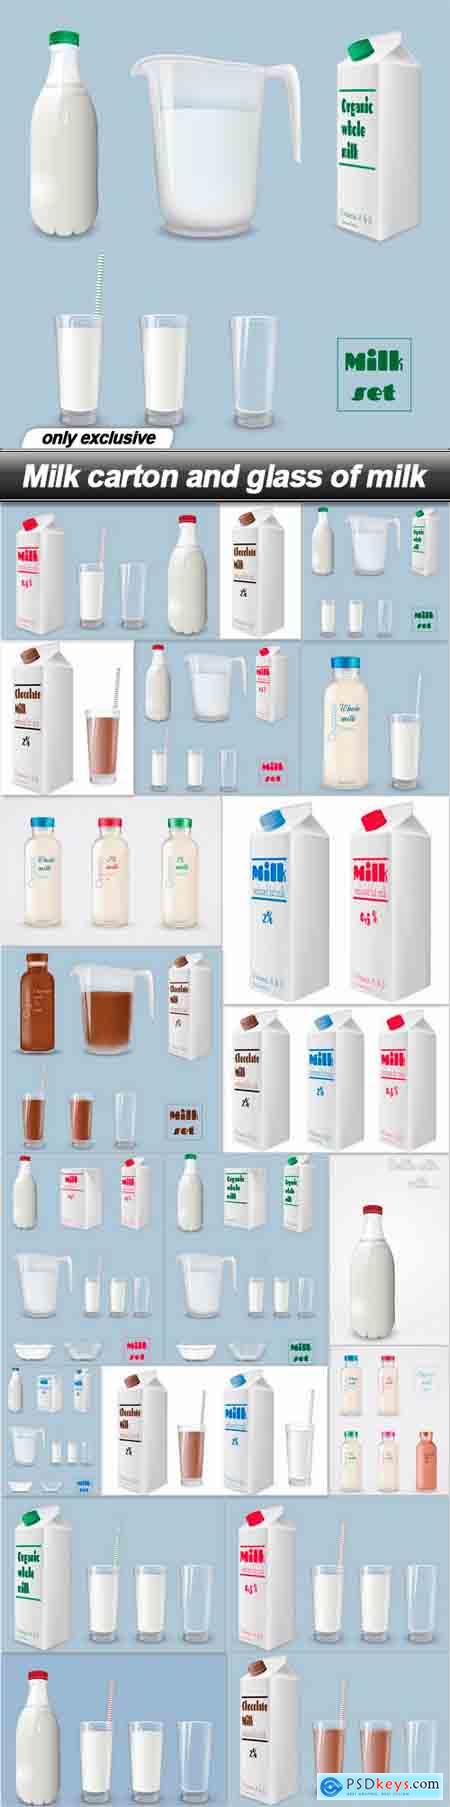 Milk carton and glass of milk - 20 EPS